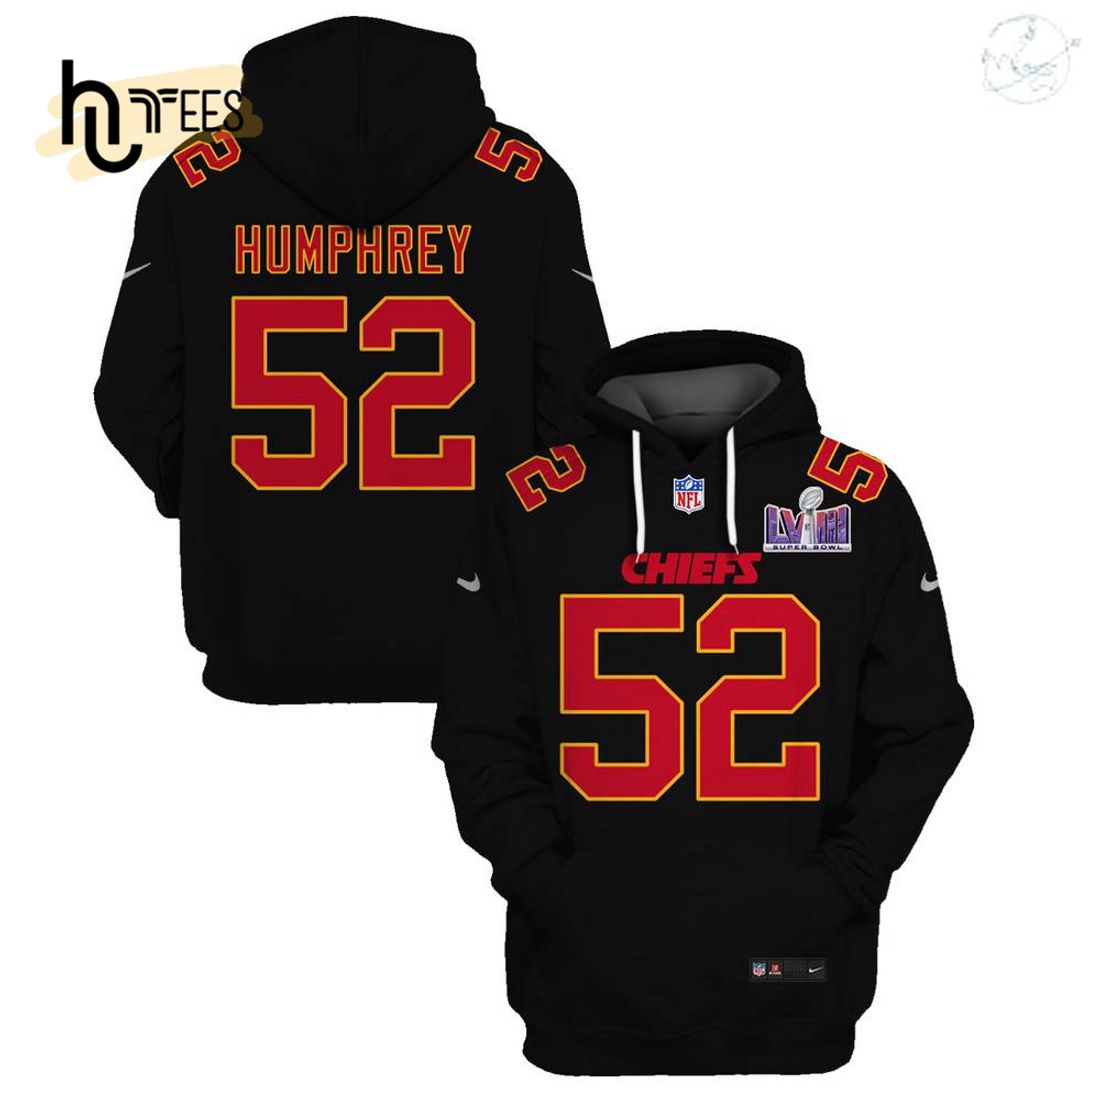 Humphrey Creed home jersey